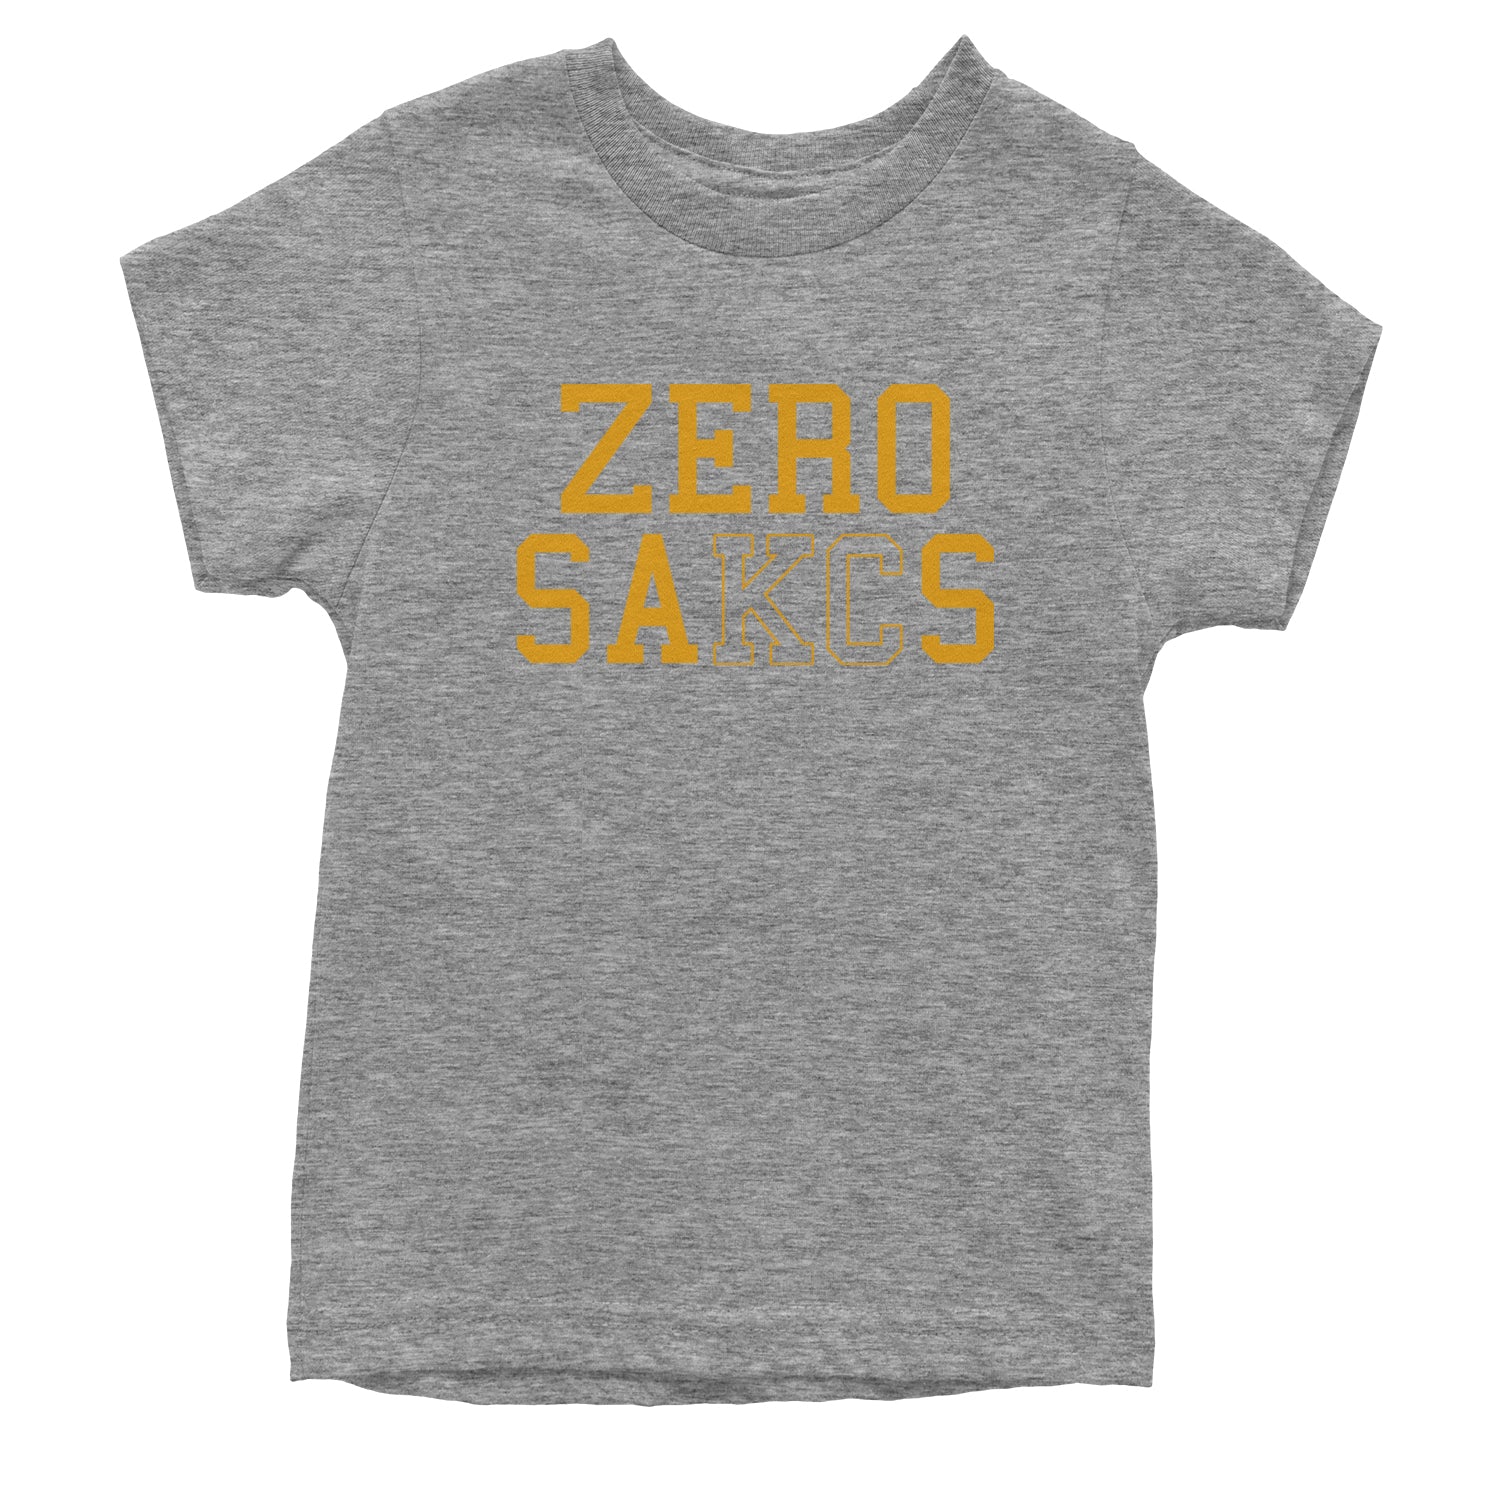 Zero Sacks Kansas City Youth T-shirt ball, brown, foot, football, kelc, orlando, patrick, sacks, sakcs by Expression Tees